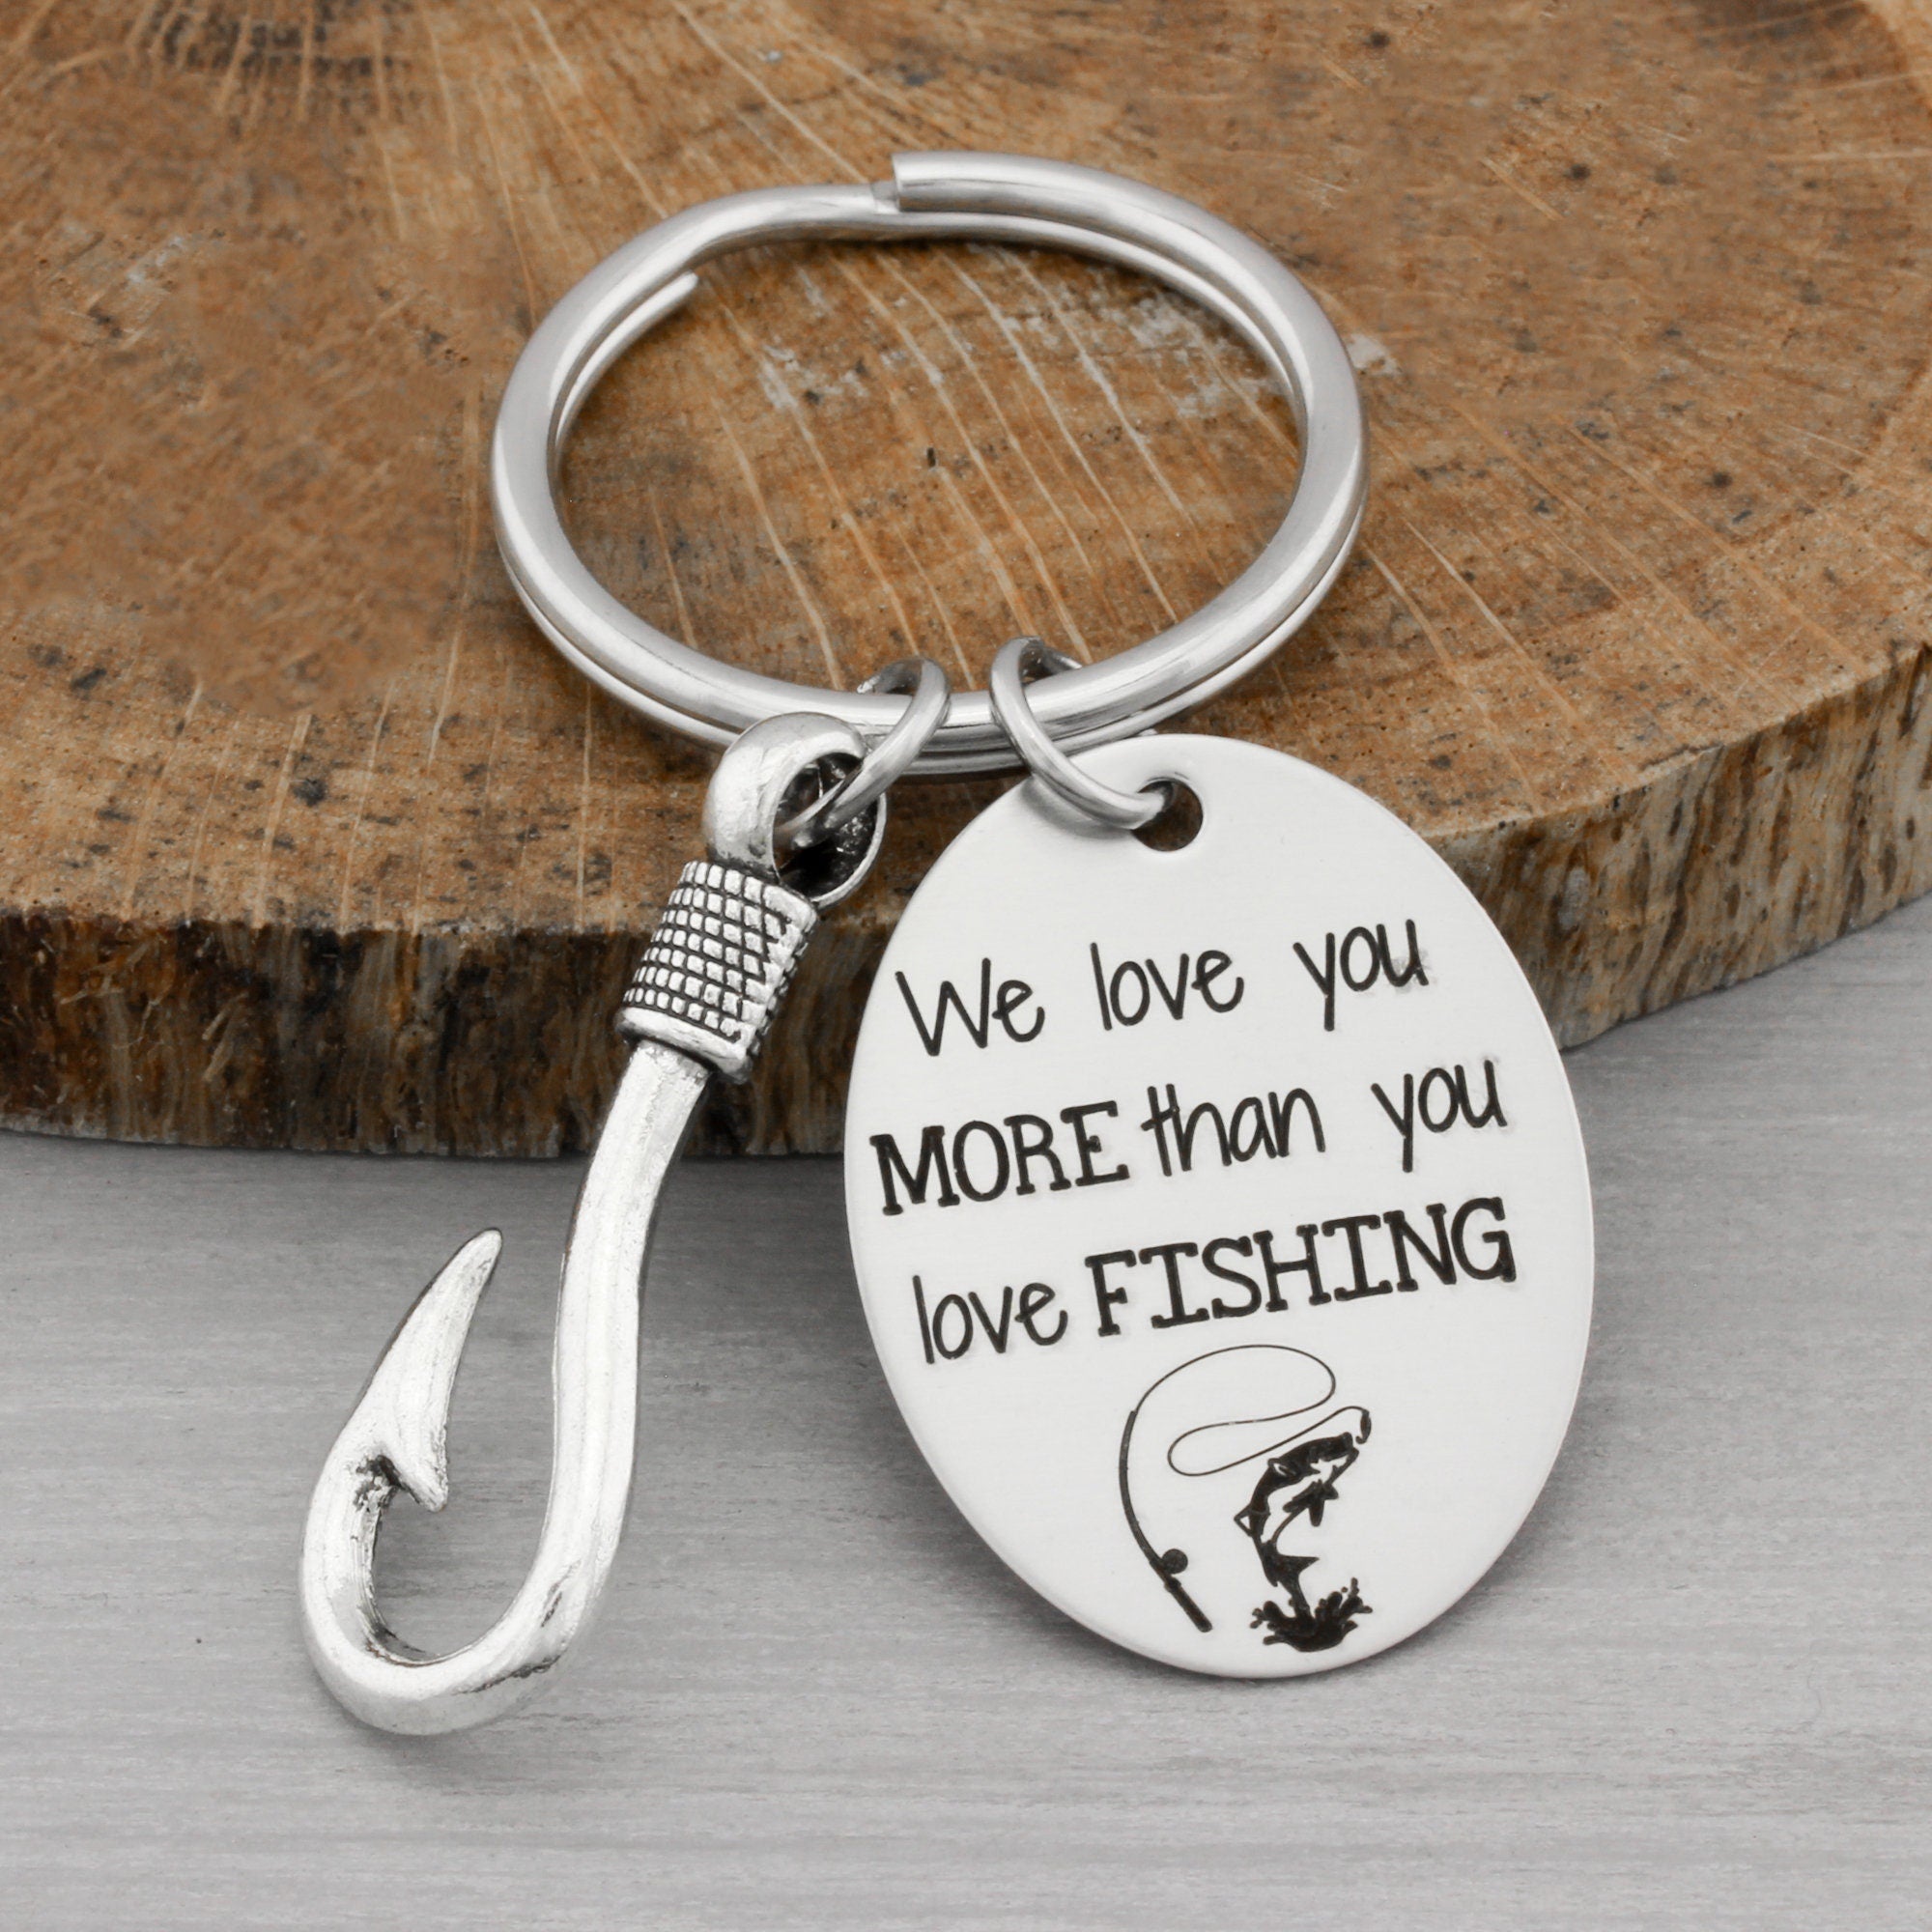 Personalized Fishing Key Chain Gift - Heartfelt Tokens